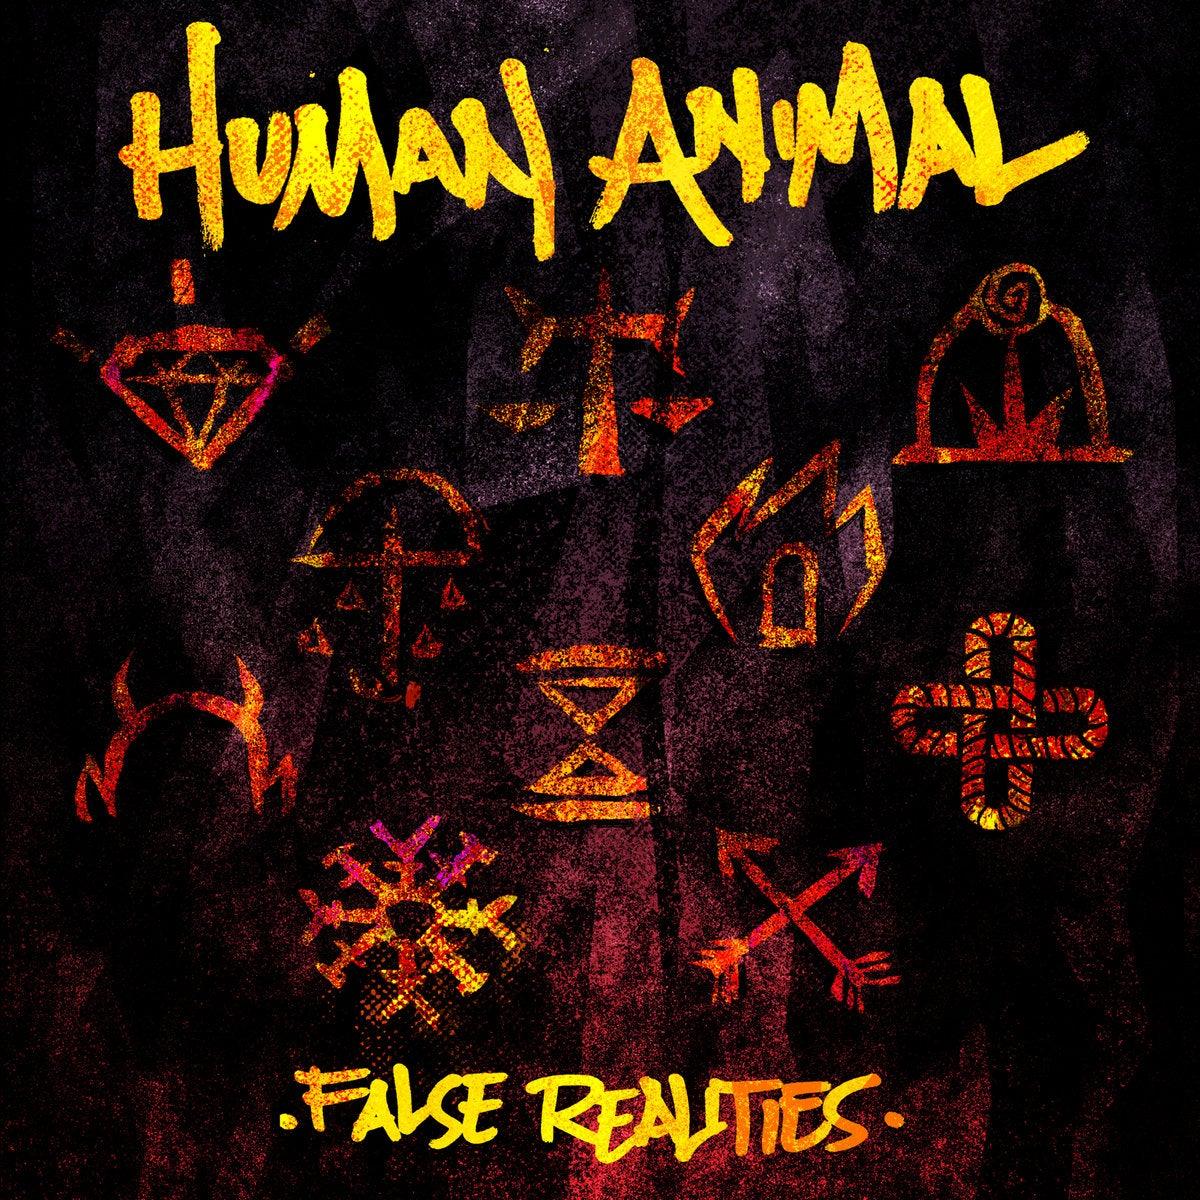 Buy – Human Animal "False Realities" CD – Band & Music Merch – Cold Cuts Merch